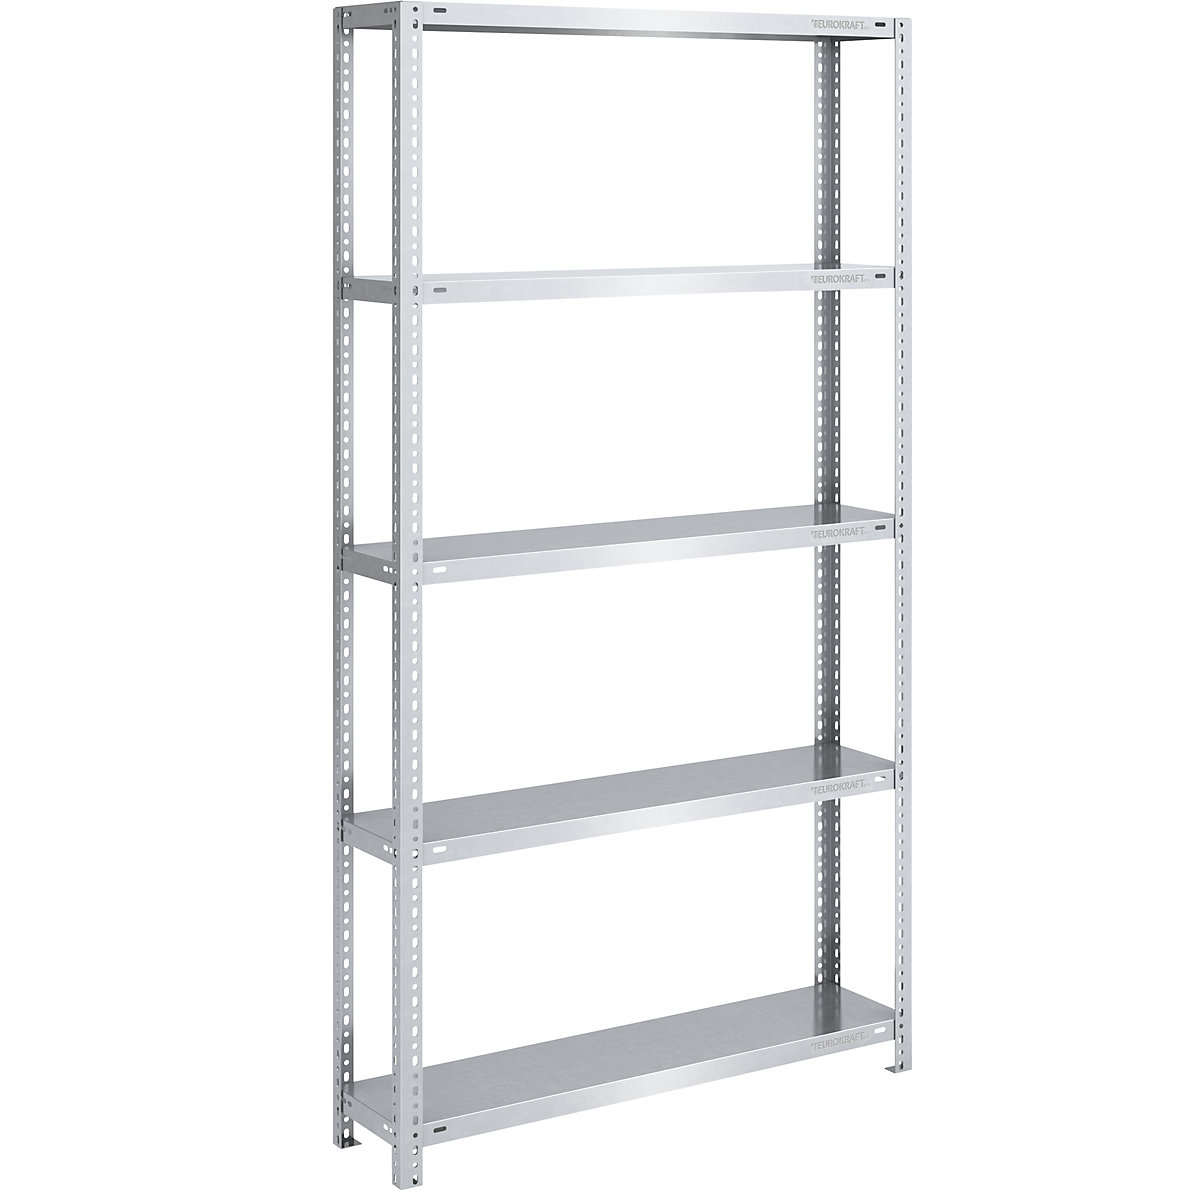 Bolt-together storage shelving, zinc plated, medium duty – eurokraft pro, shelf unit height 2000 mm, shelf width 1000 mm, depth 300 mm, standard shelf unit-4